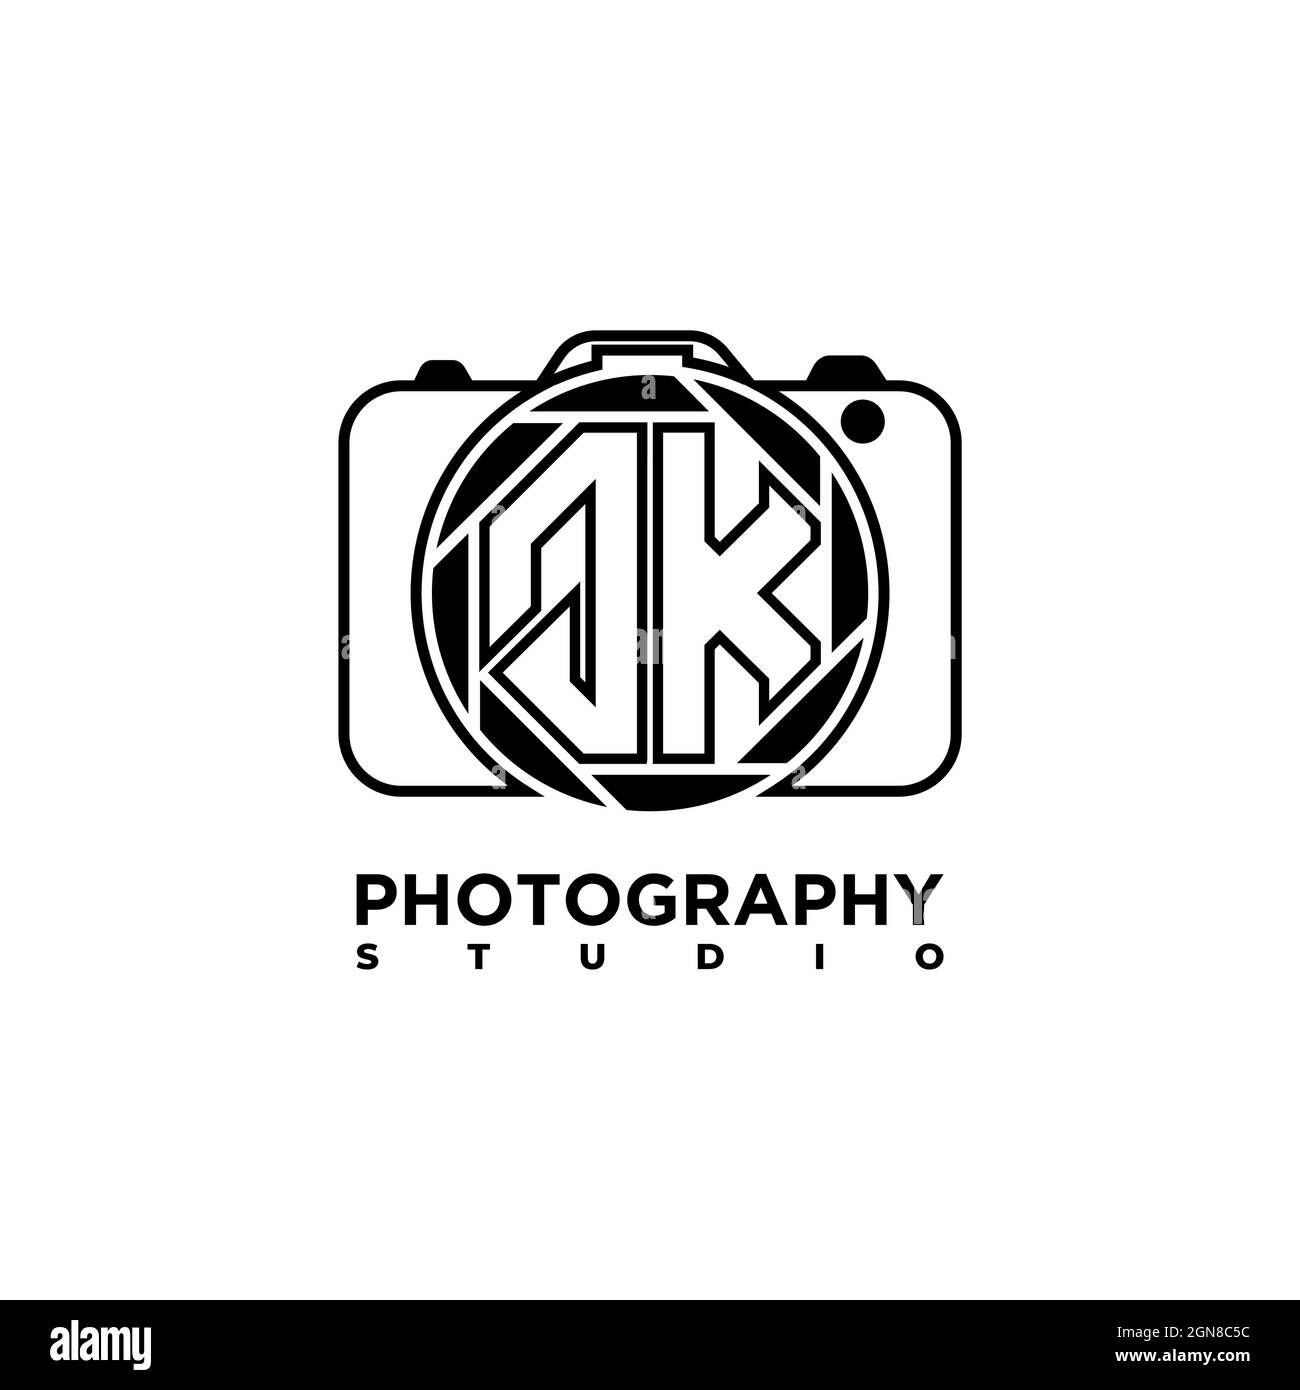 QK Logo letter Geometric Photograph Camera shape style template vector Stock Vector